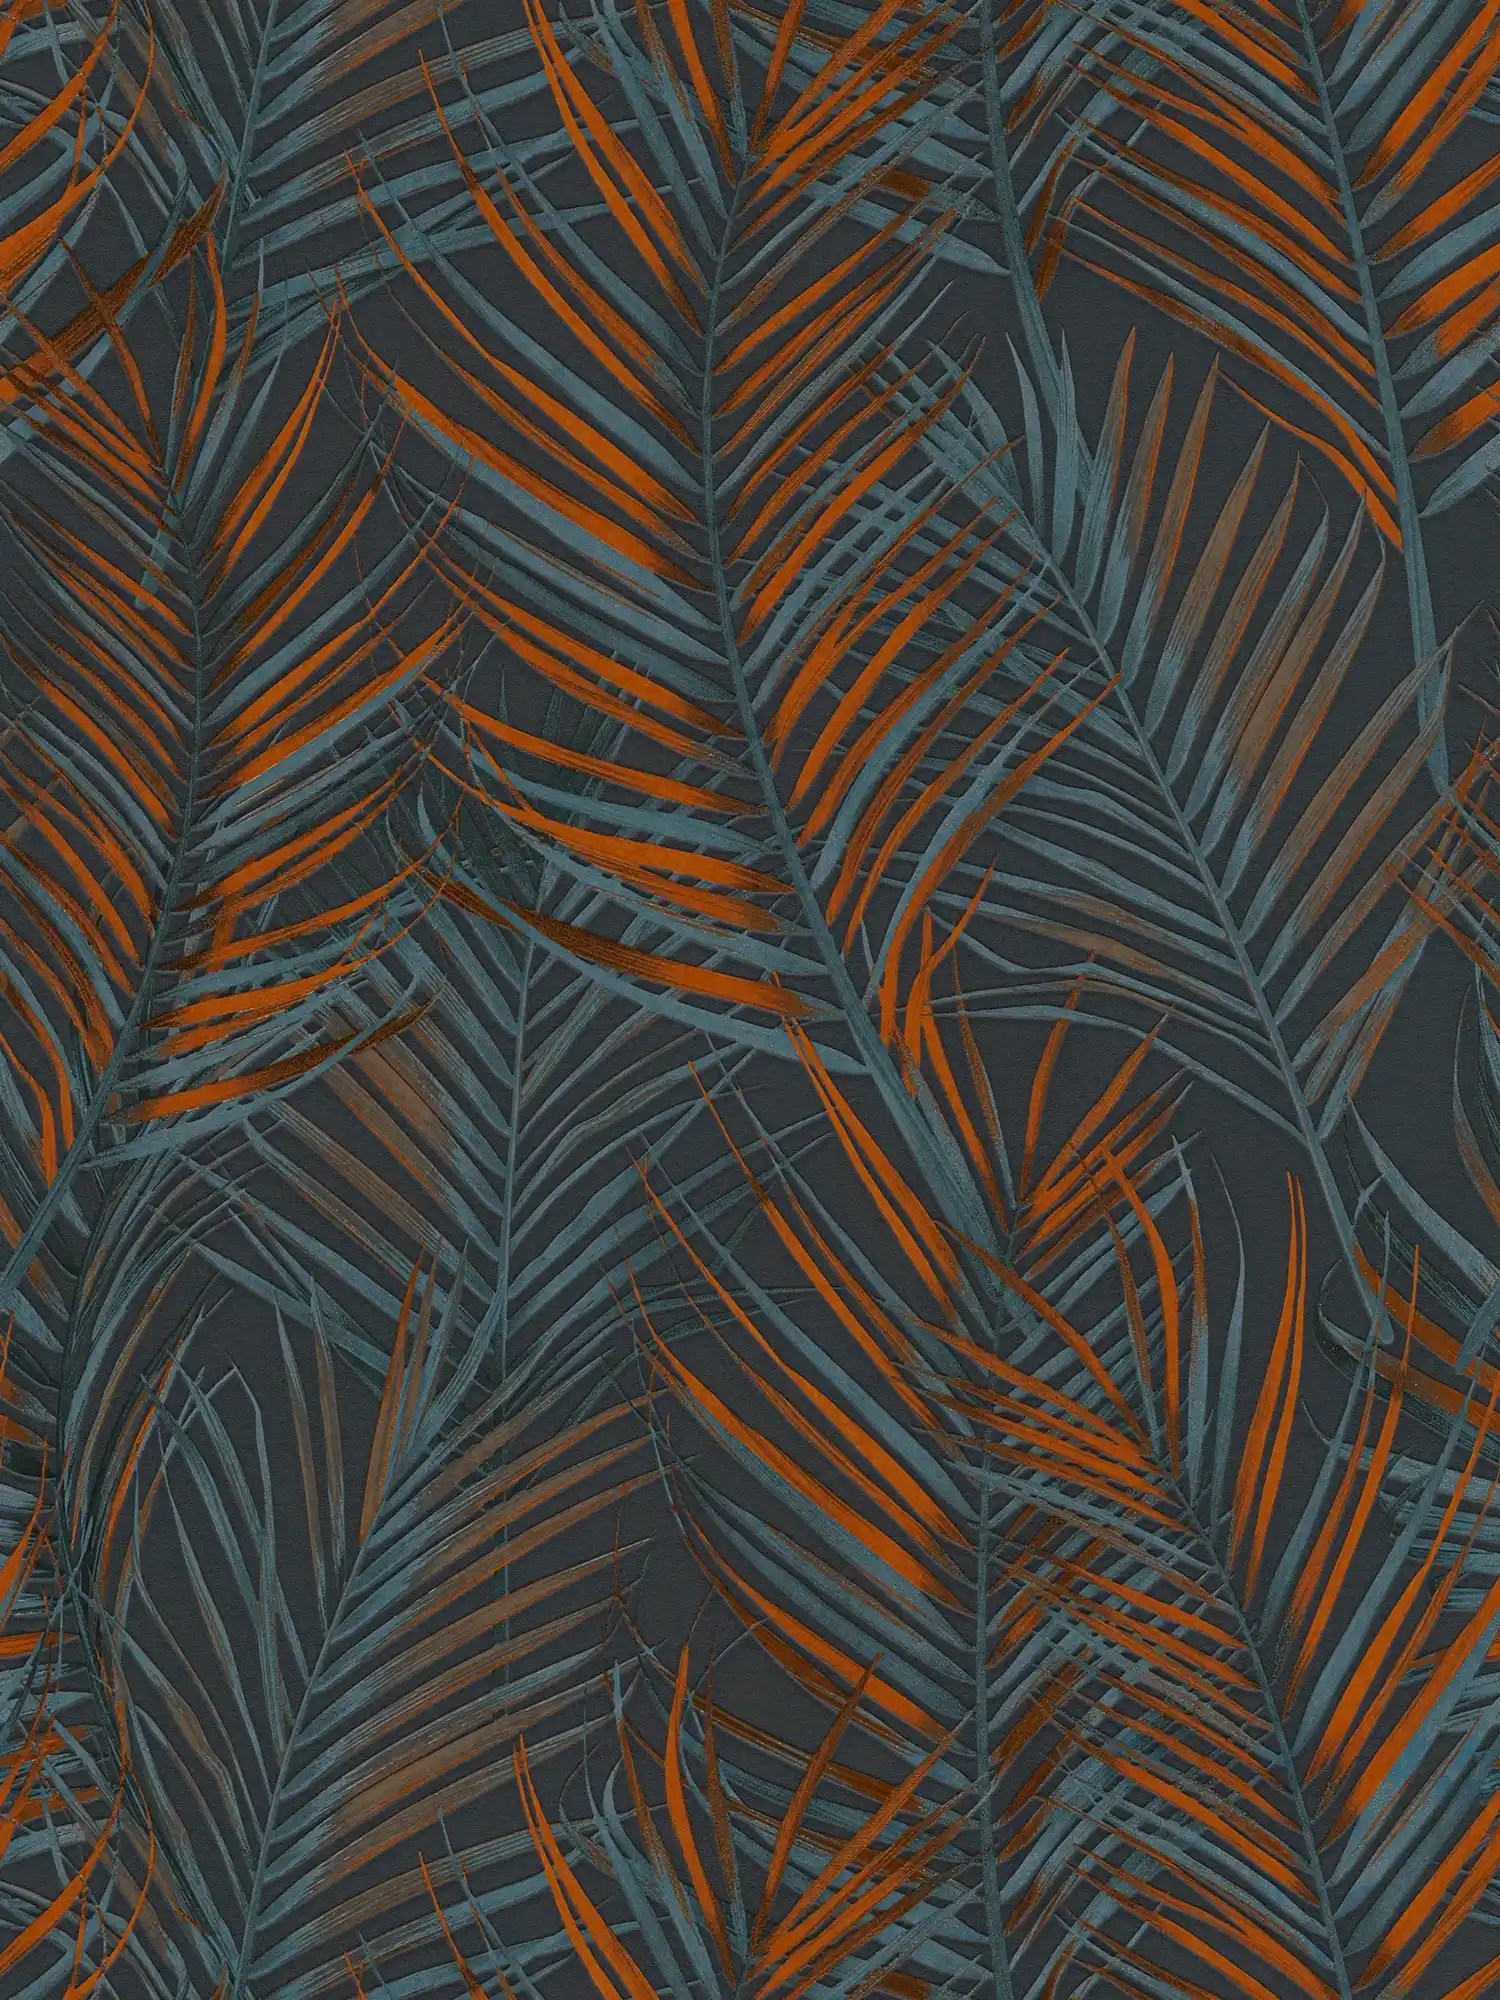 Jungle wallpaper with palm leaves in matt - black, orange, petrol
